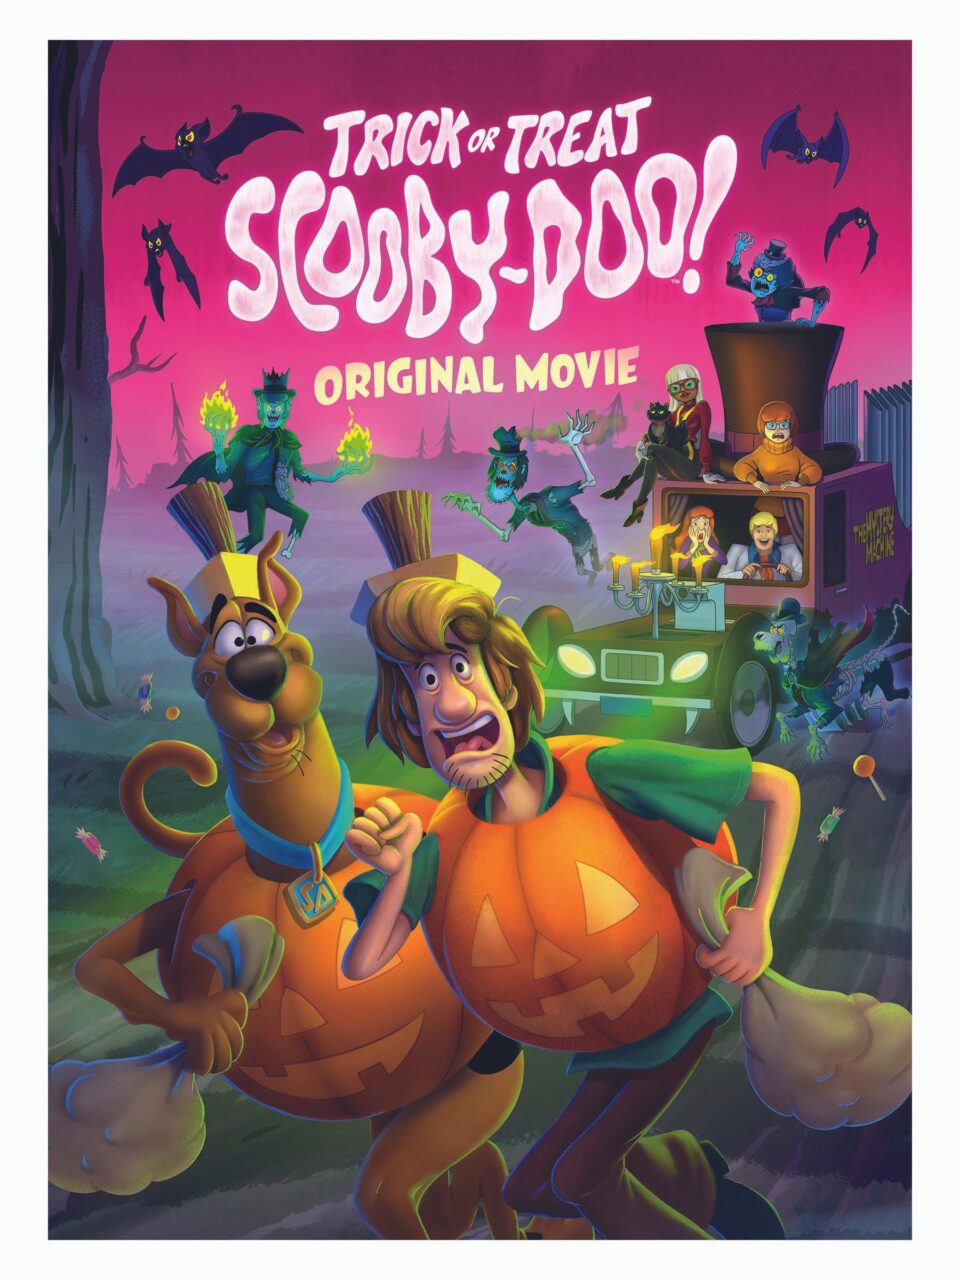 Trick Or Treat Scooby-Doo! Original Movie DVD cover (Warner Bros. Home Entertainment)